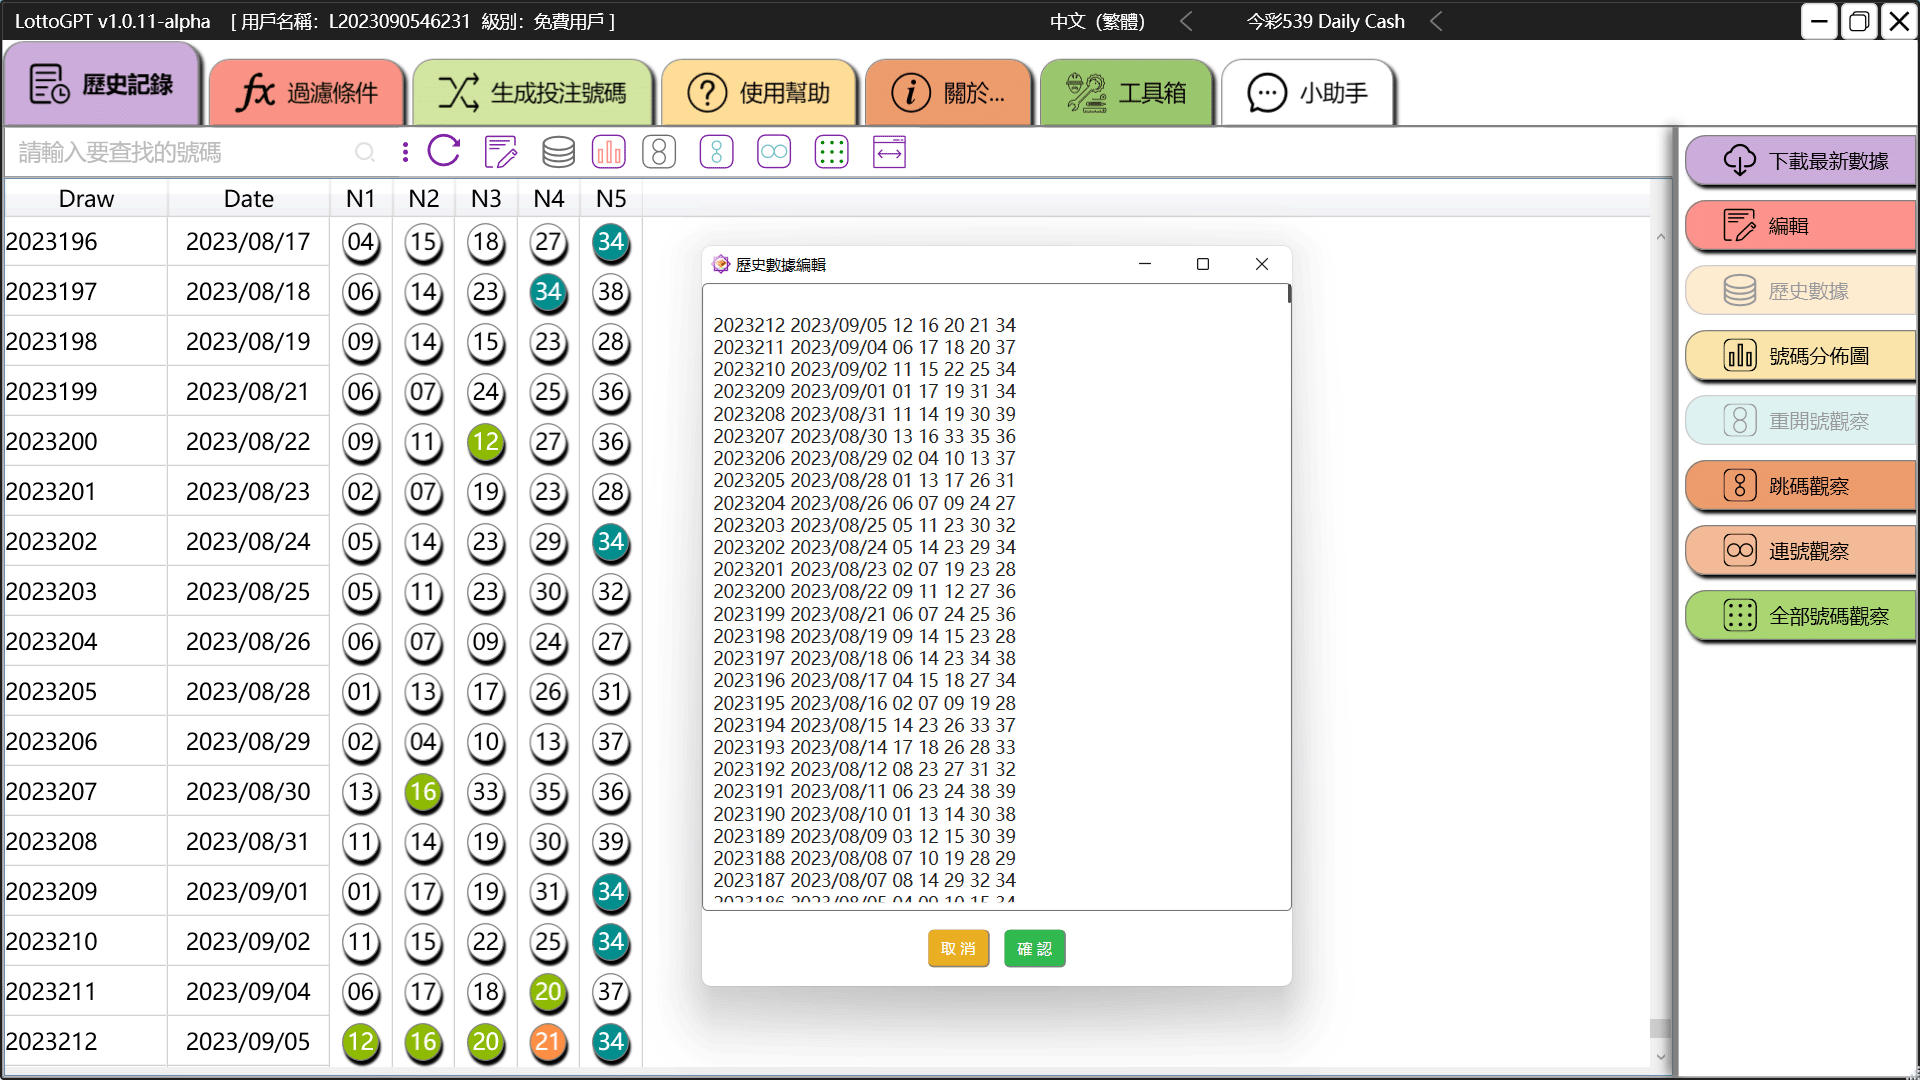 screenshot of lottoGPT interface 3